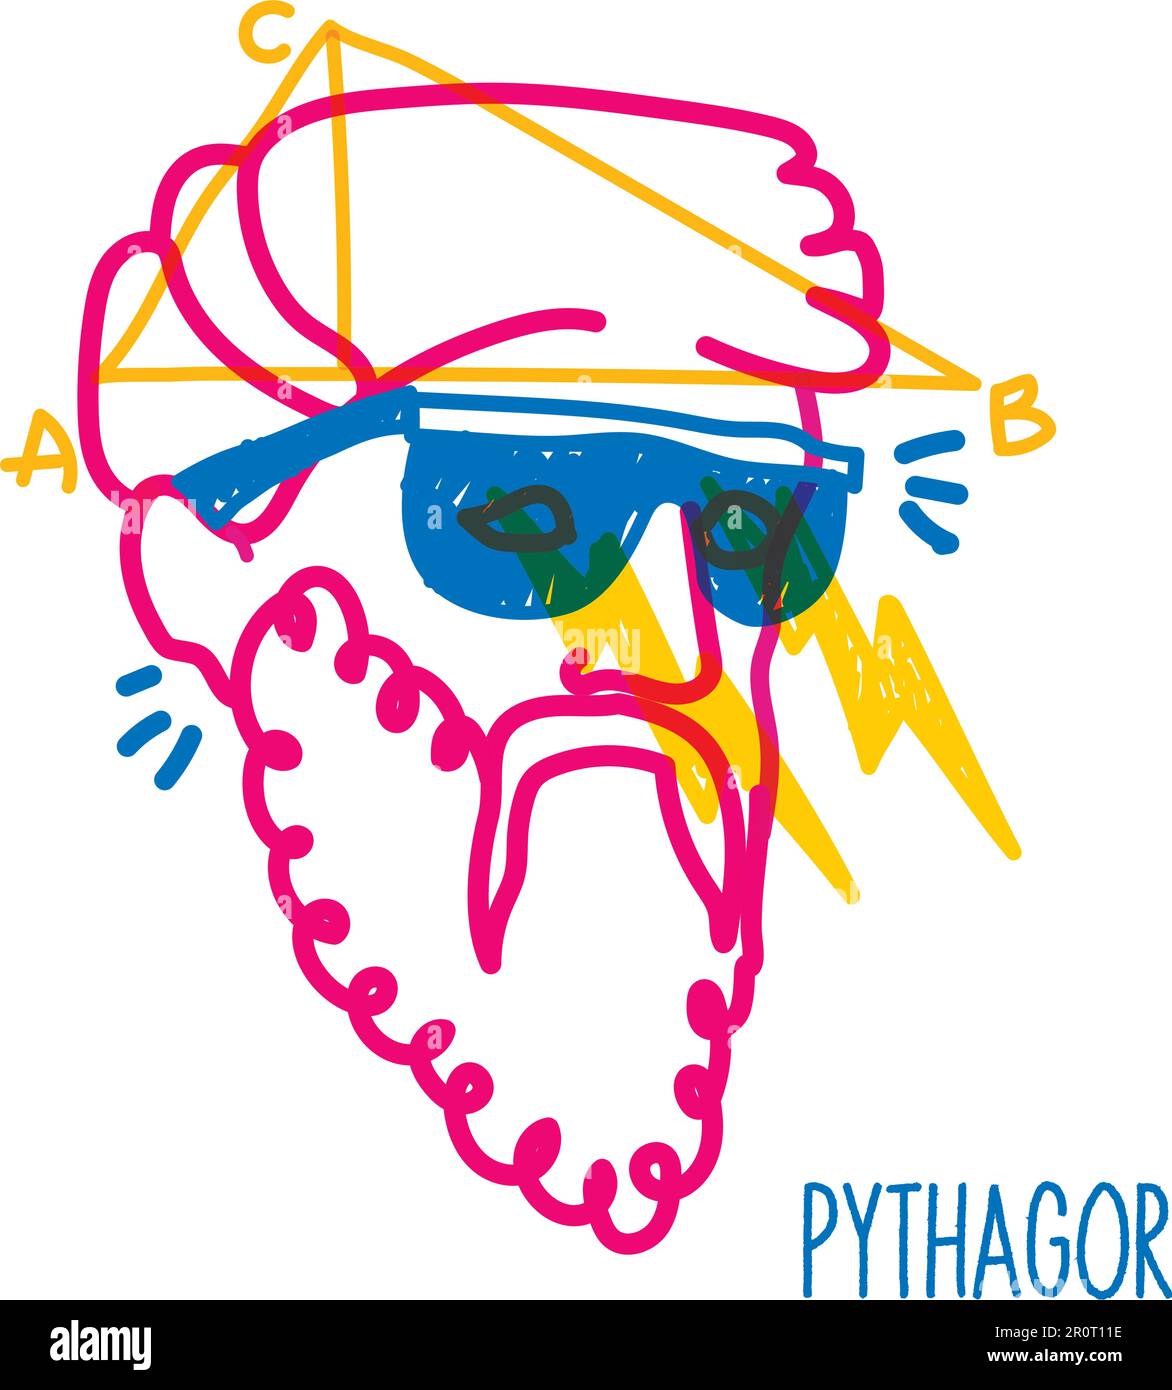 Poster des berühmten alten Wissenschaftlers Pythagoras, Stock Vektor